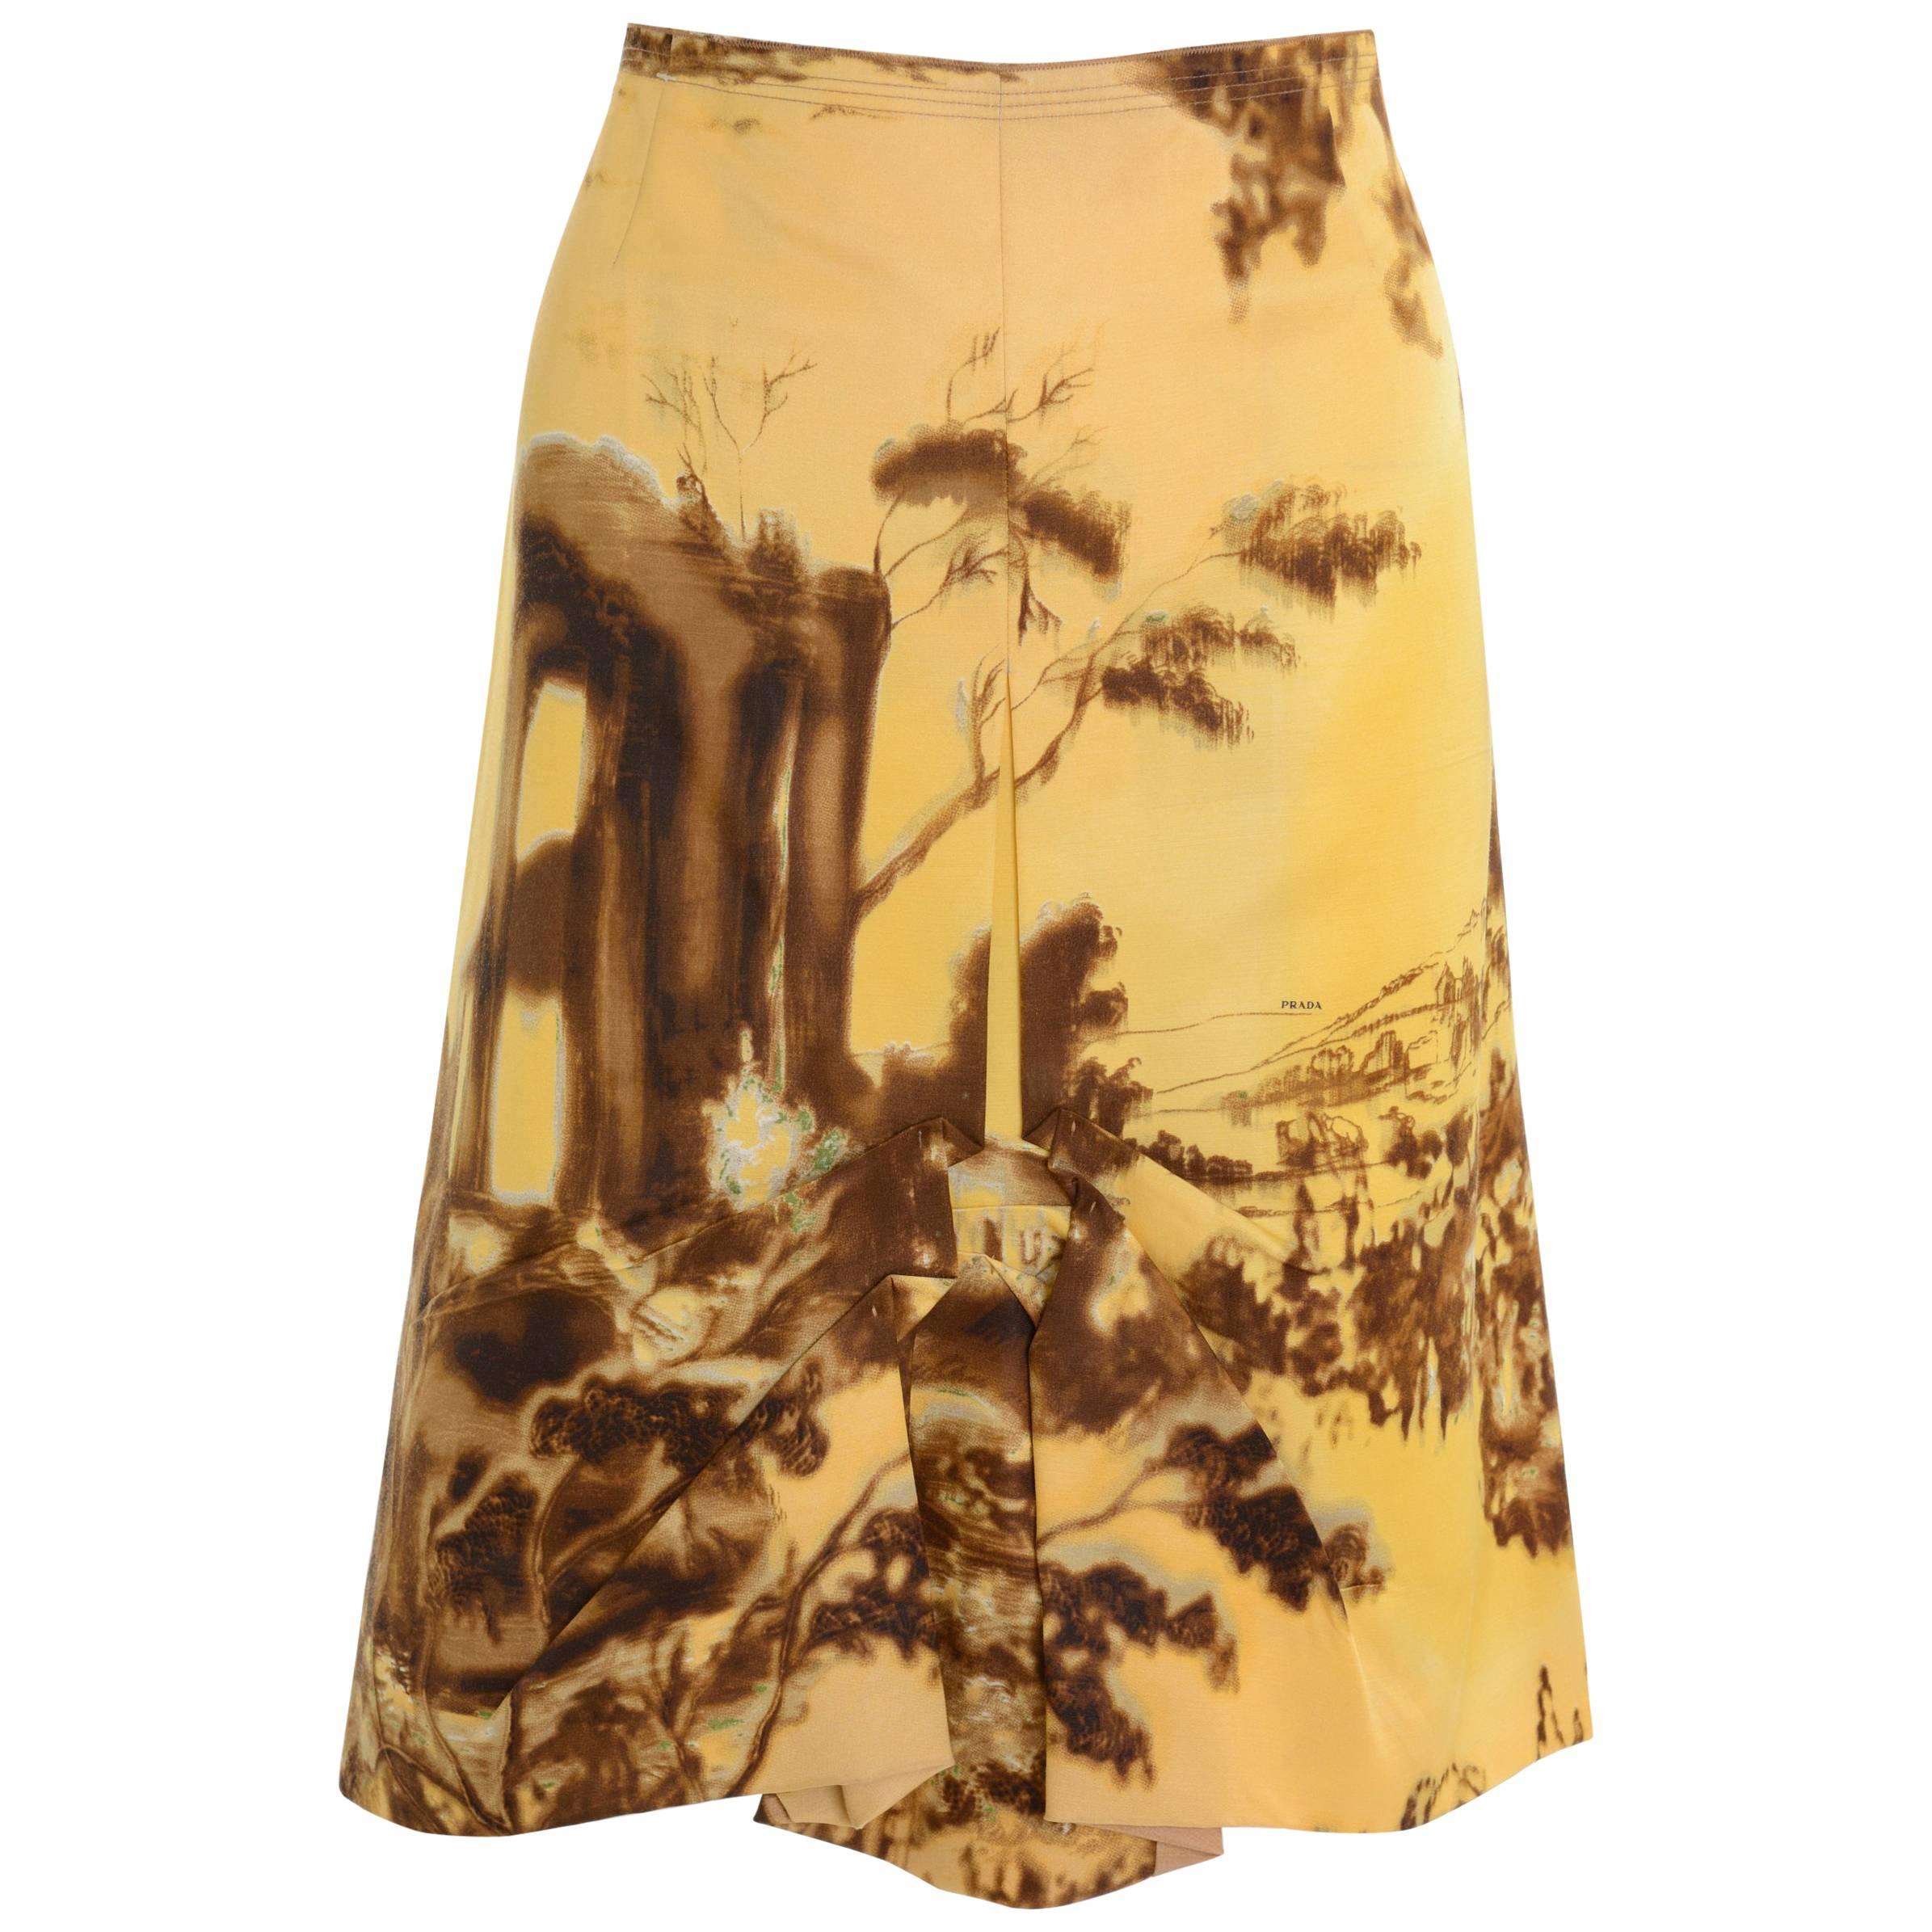 PRADA Landscape Print Skirt